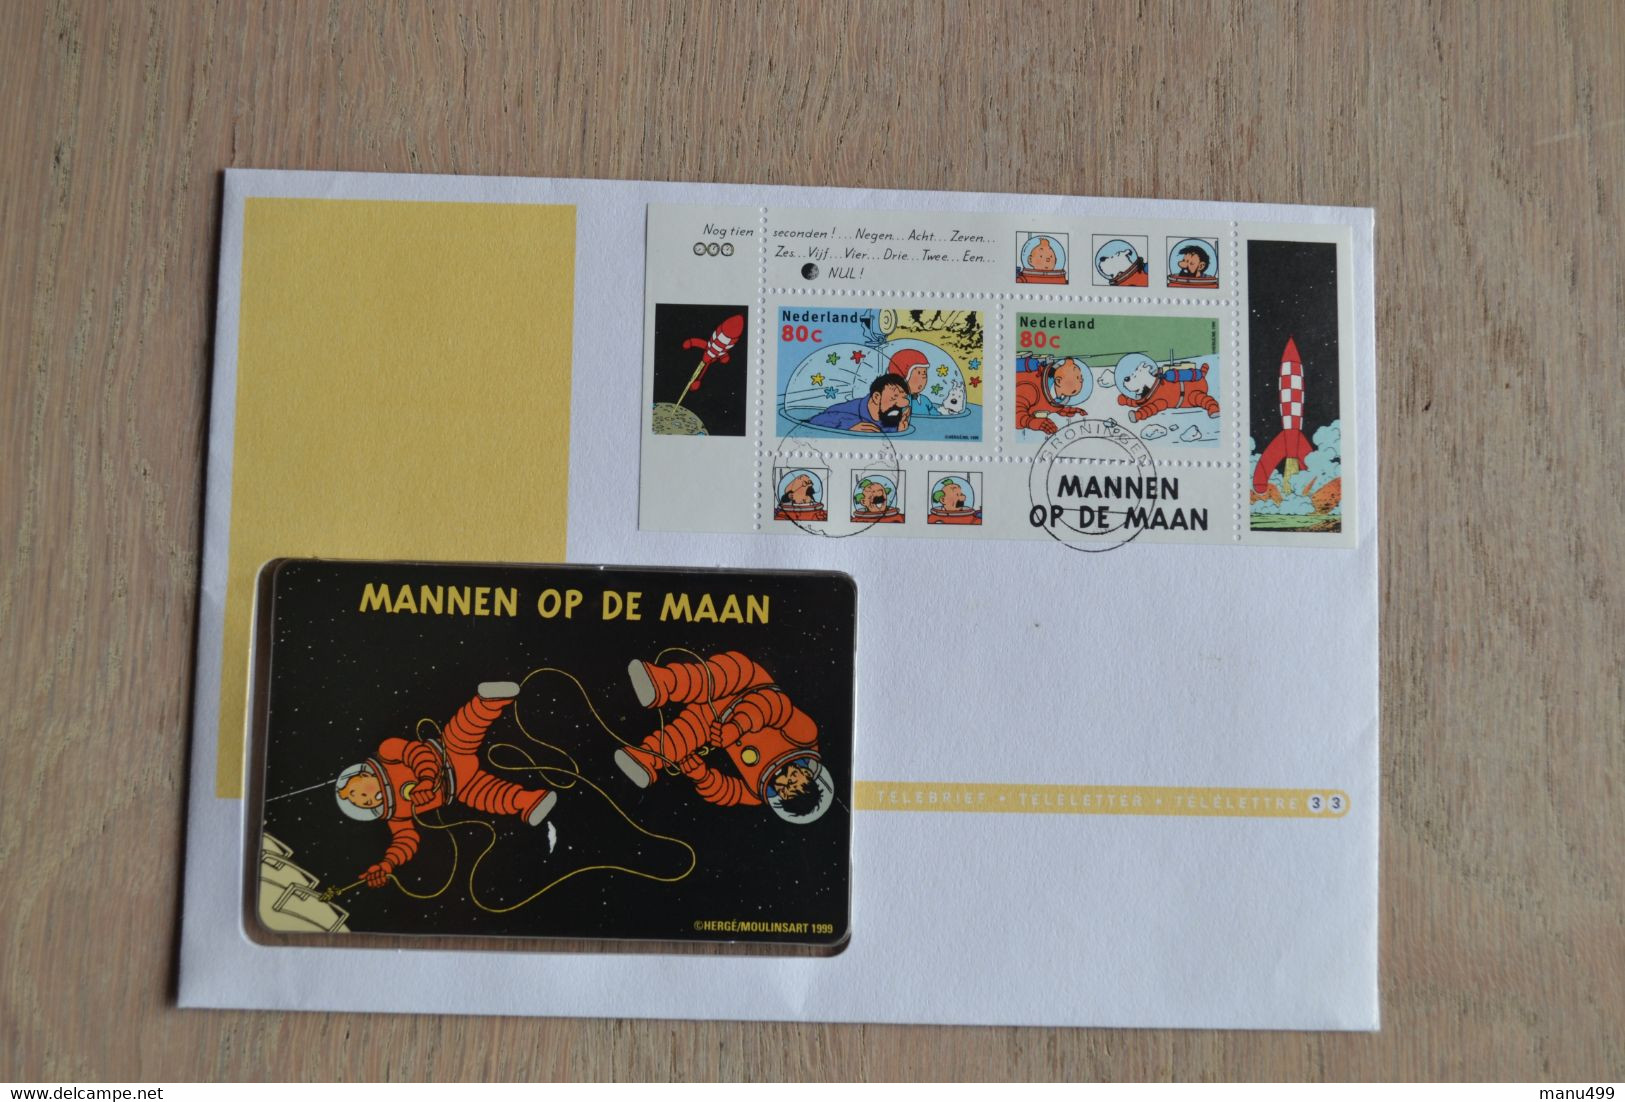 Tintin / Kuifje Mannen Op De Maan Télécarte Prépayée Pays-Bas Netherland Phonecard - Hergé